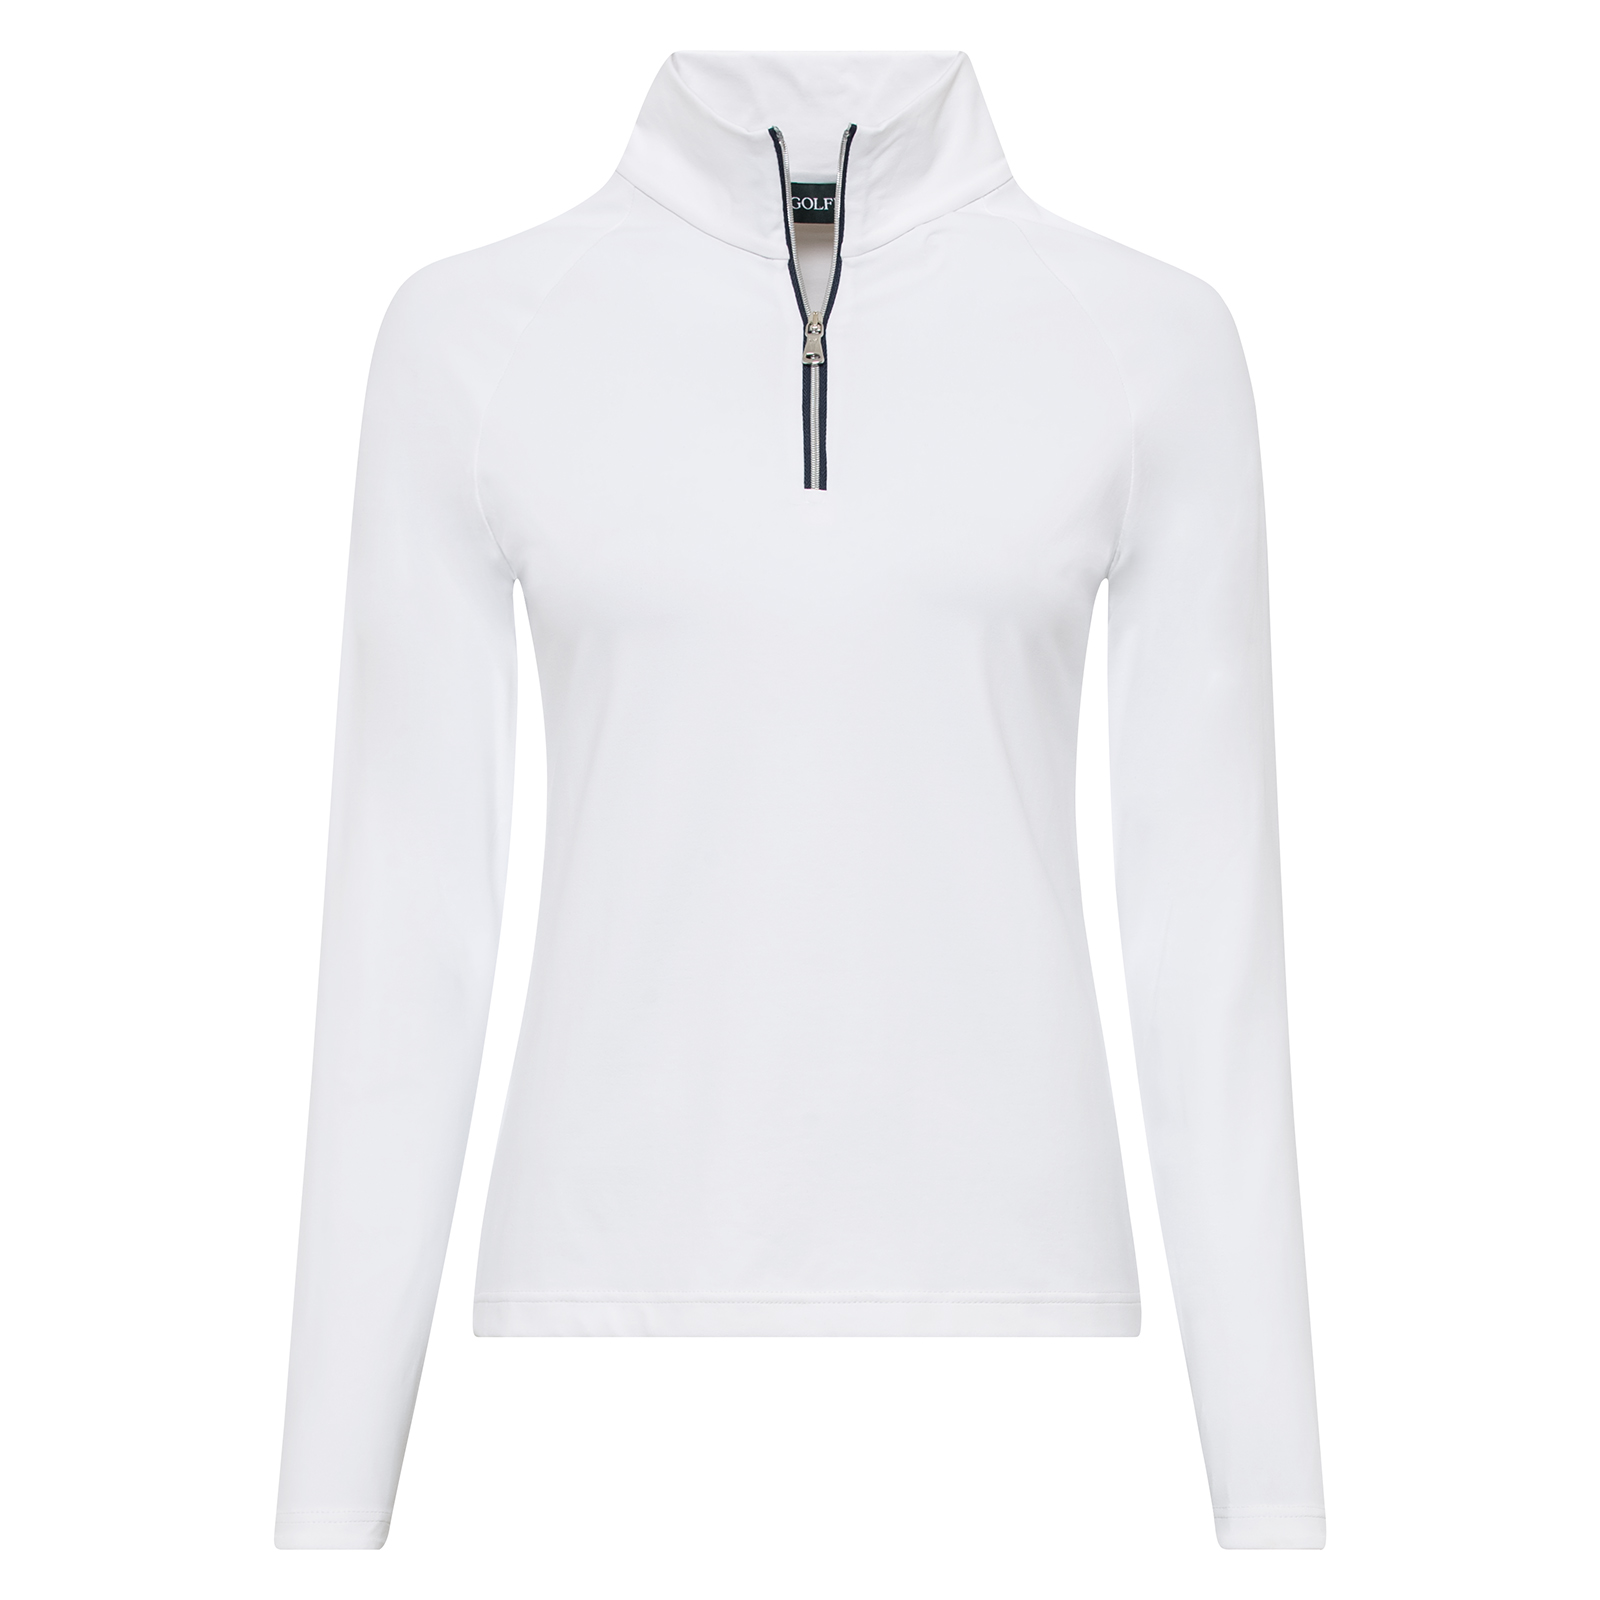 Ladies’ extra soft half-zip golf sweater with moisture management function